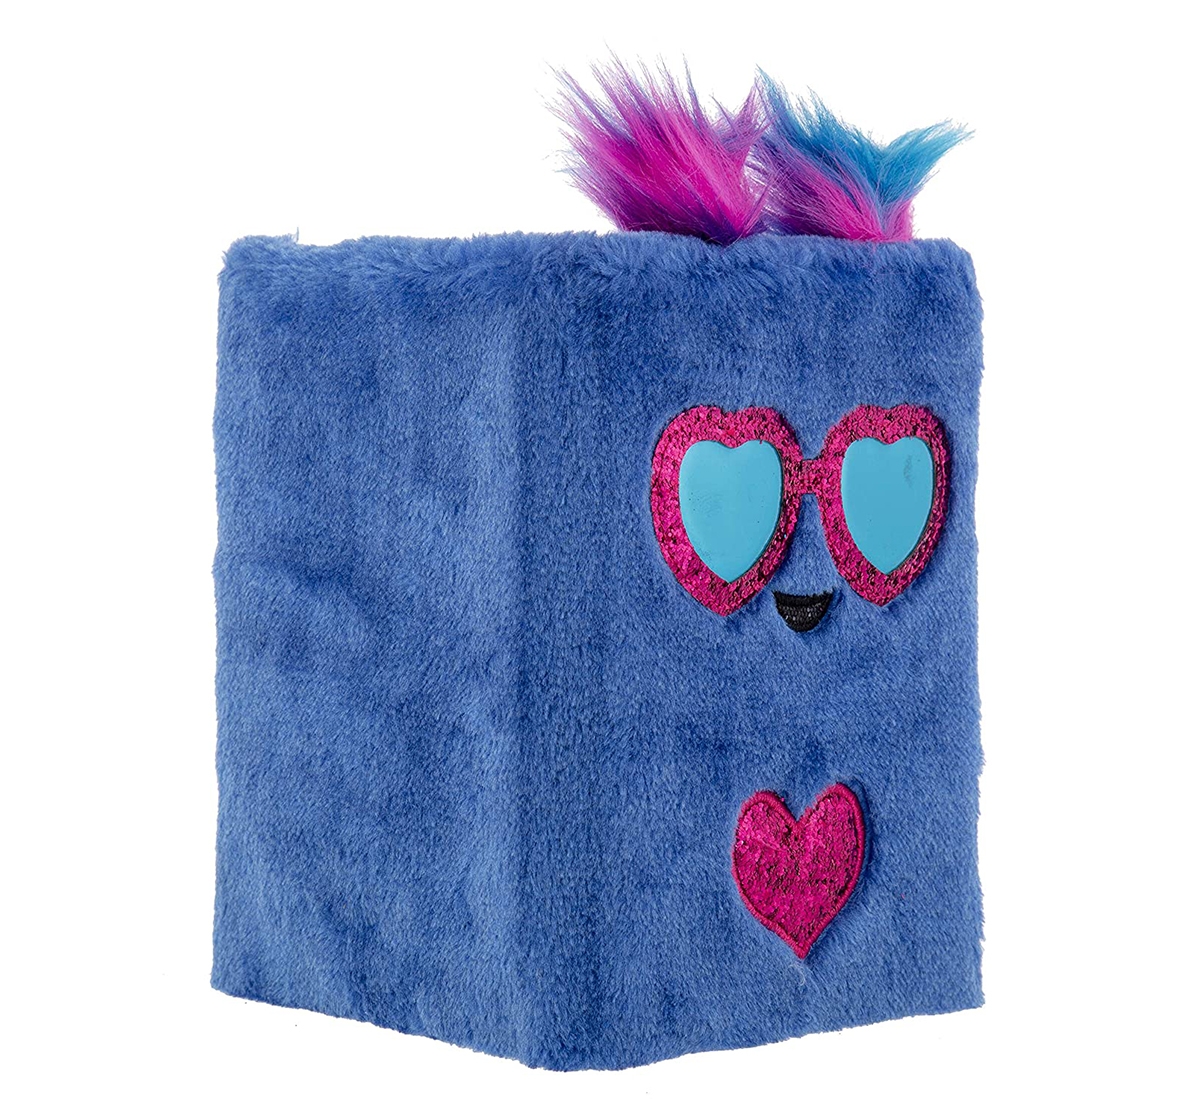 Mirada | Mirada Owl Plush Study & Desk Accessories for Kids age 3Y+ (Blue) 1